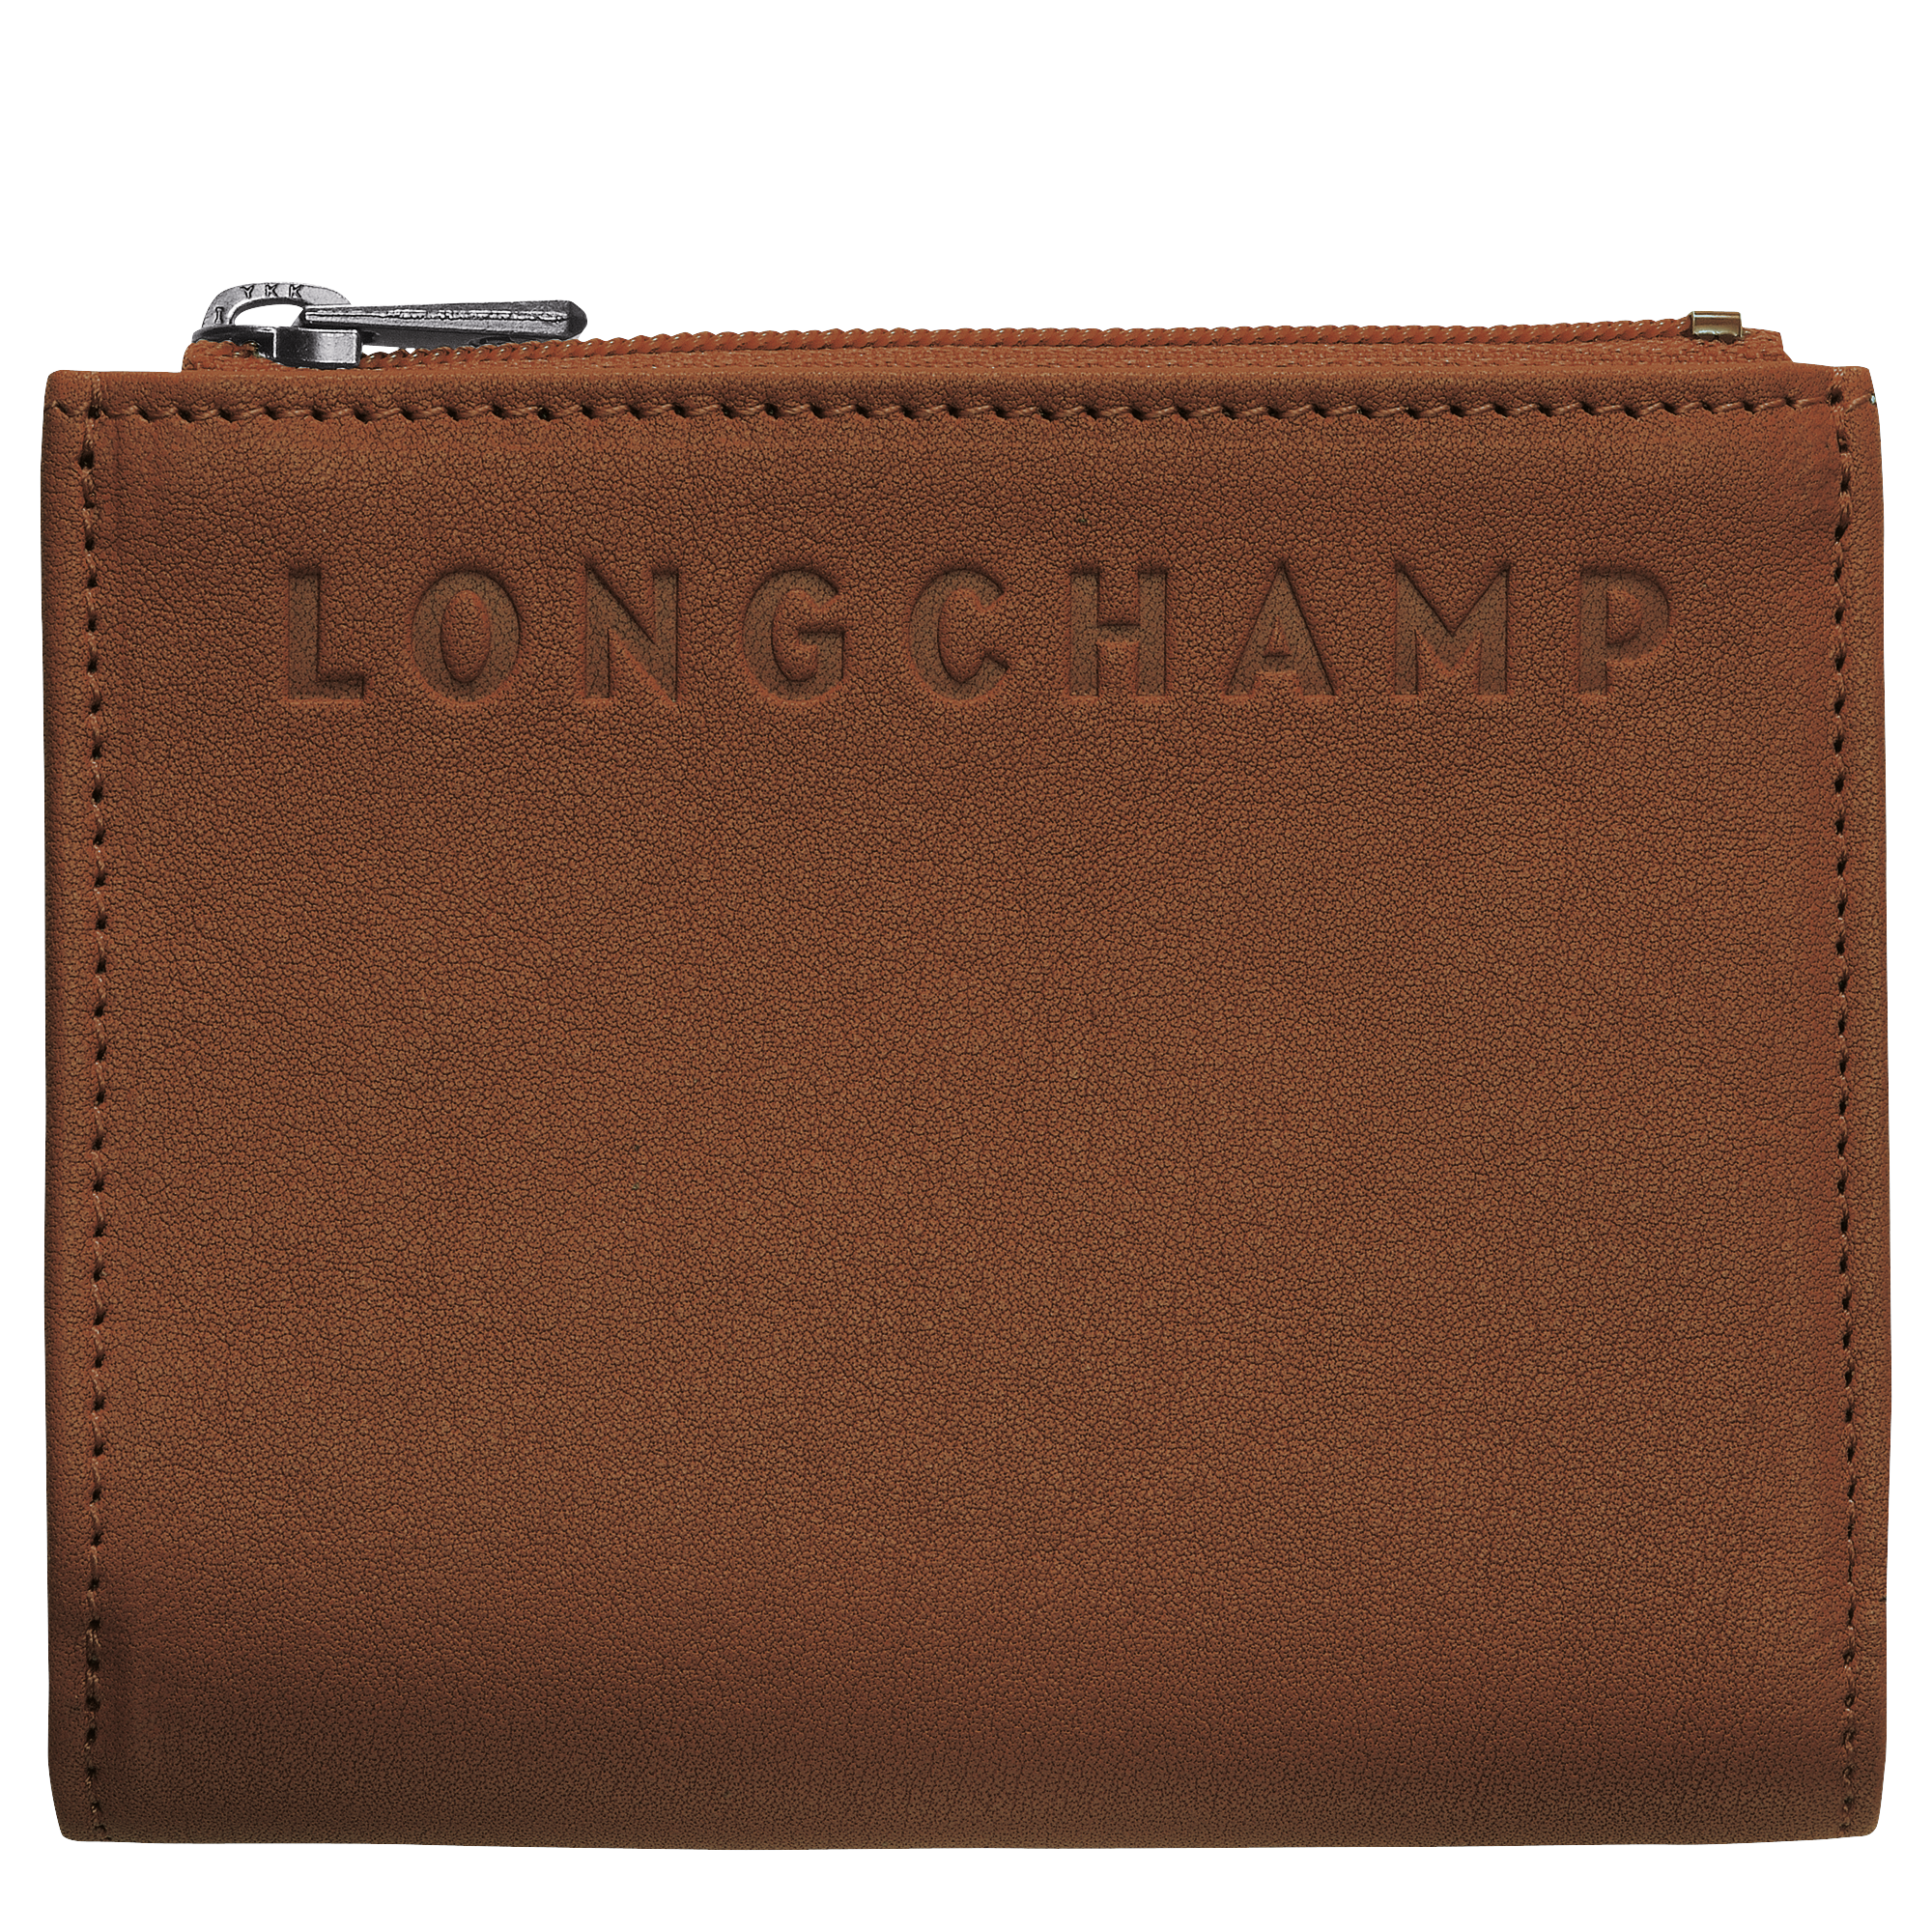 longchamp wallets australia